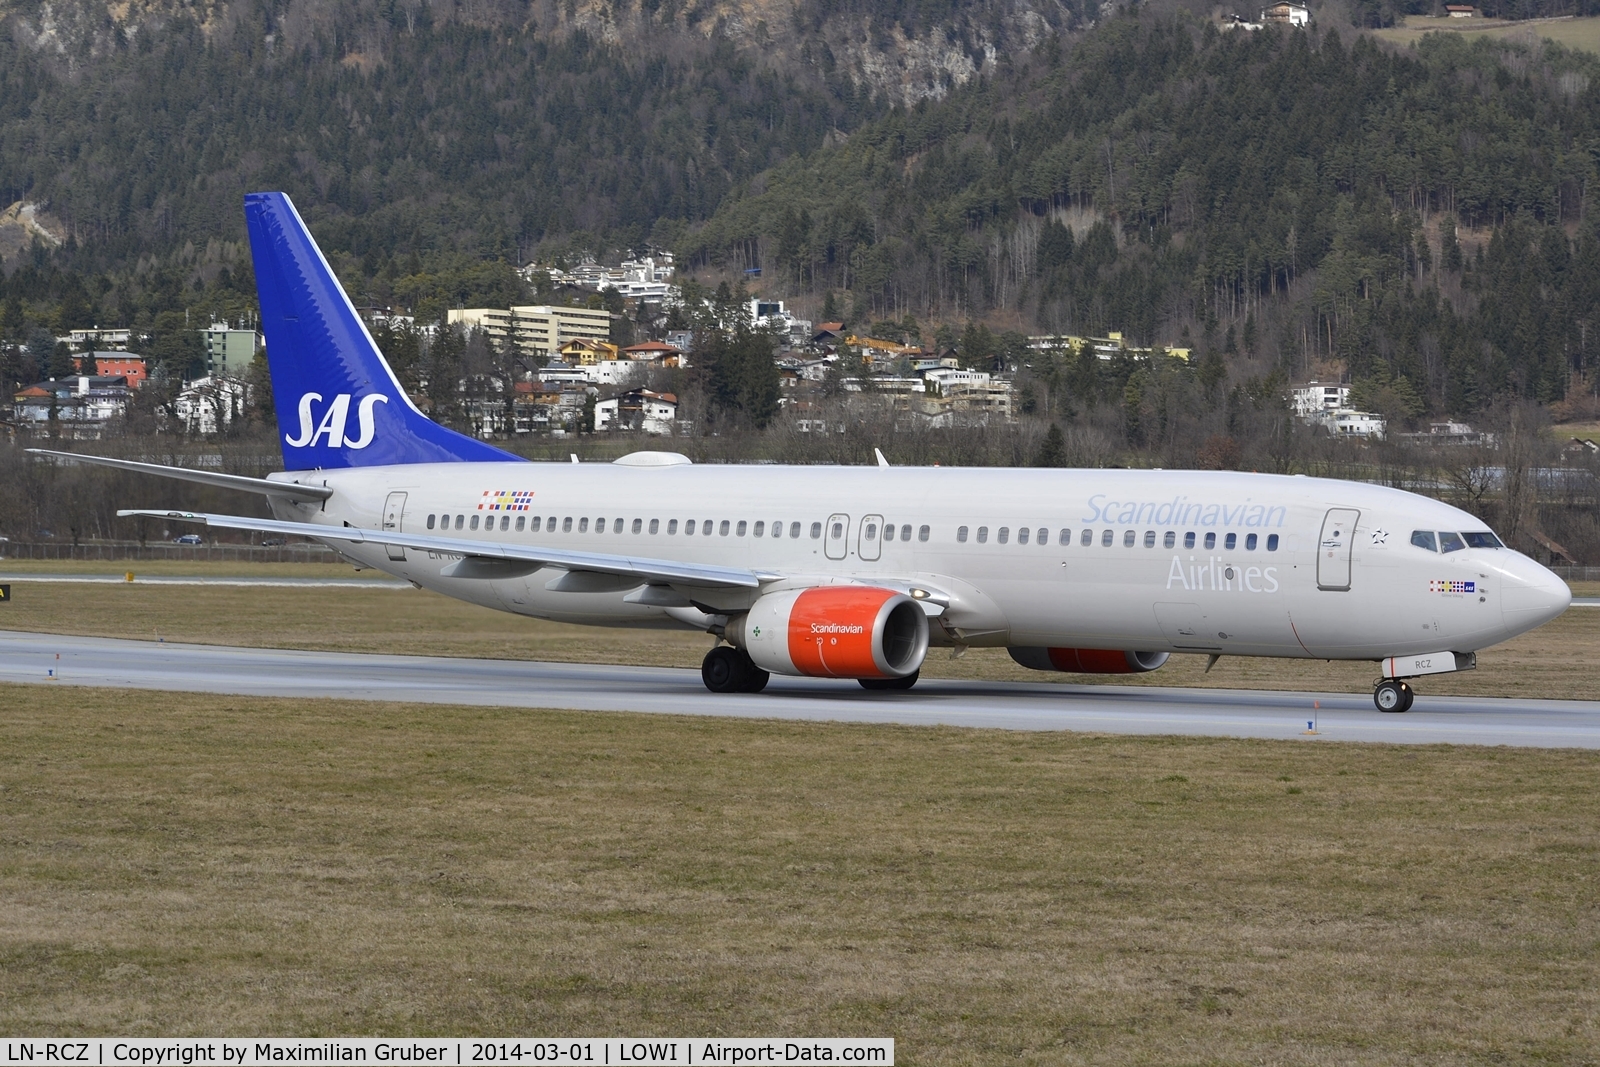 LN-RCZ, 2001 Boeing 737-883 C/N 30197, Scandinavian Airlines